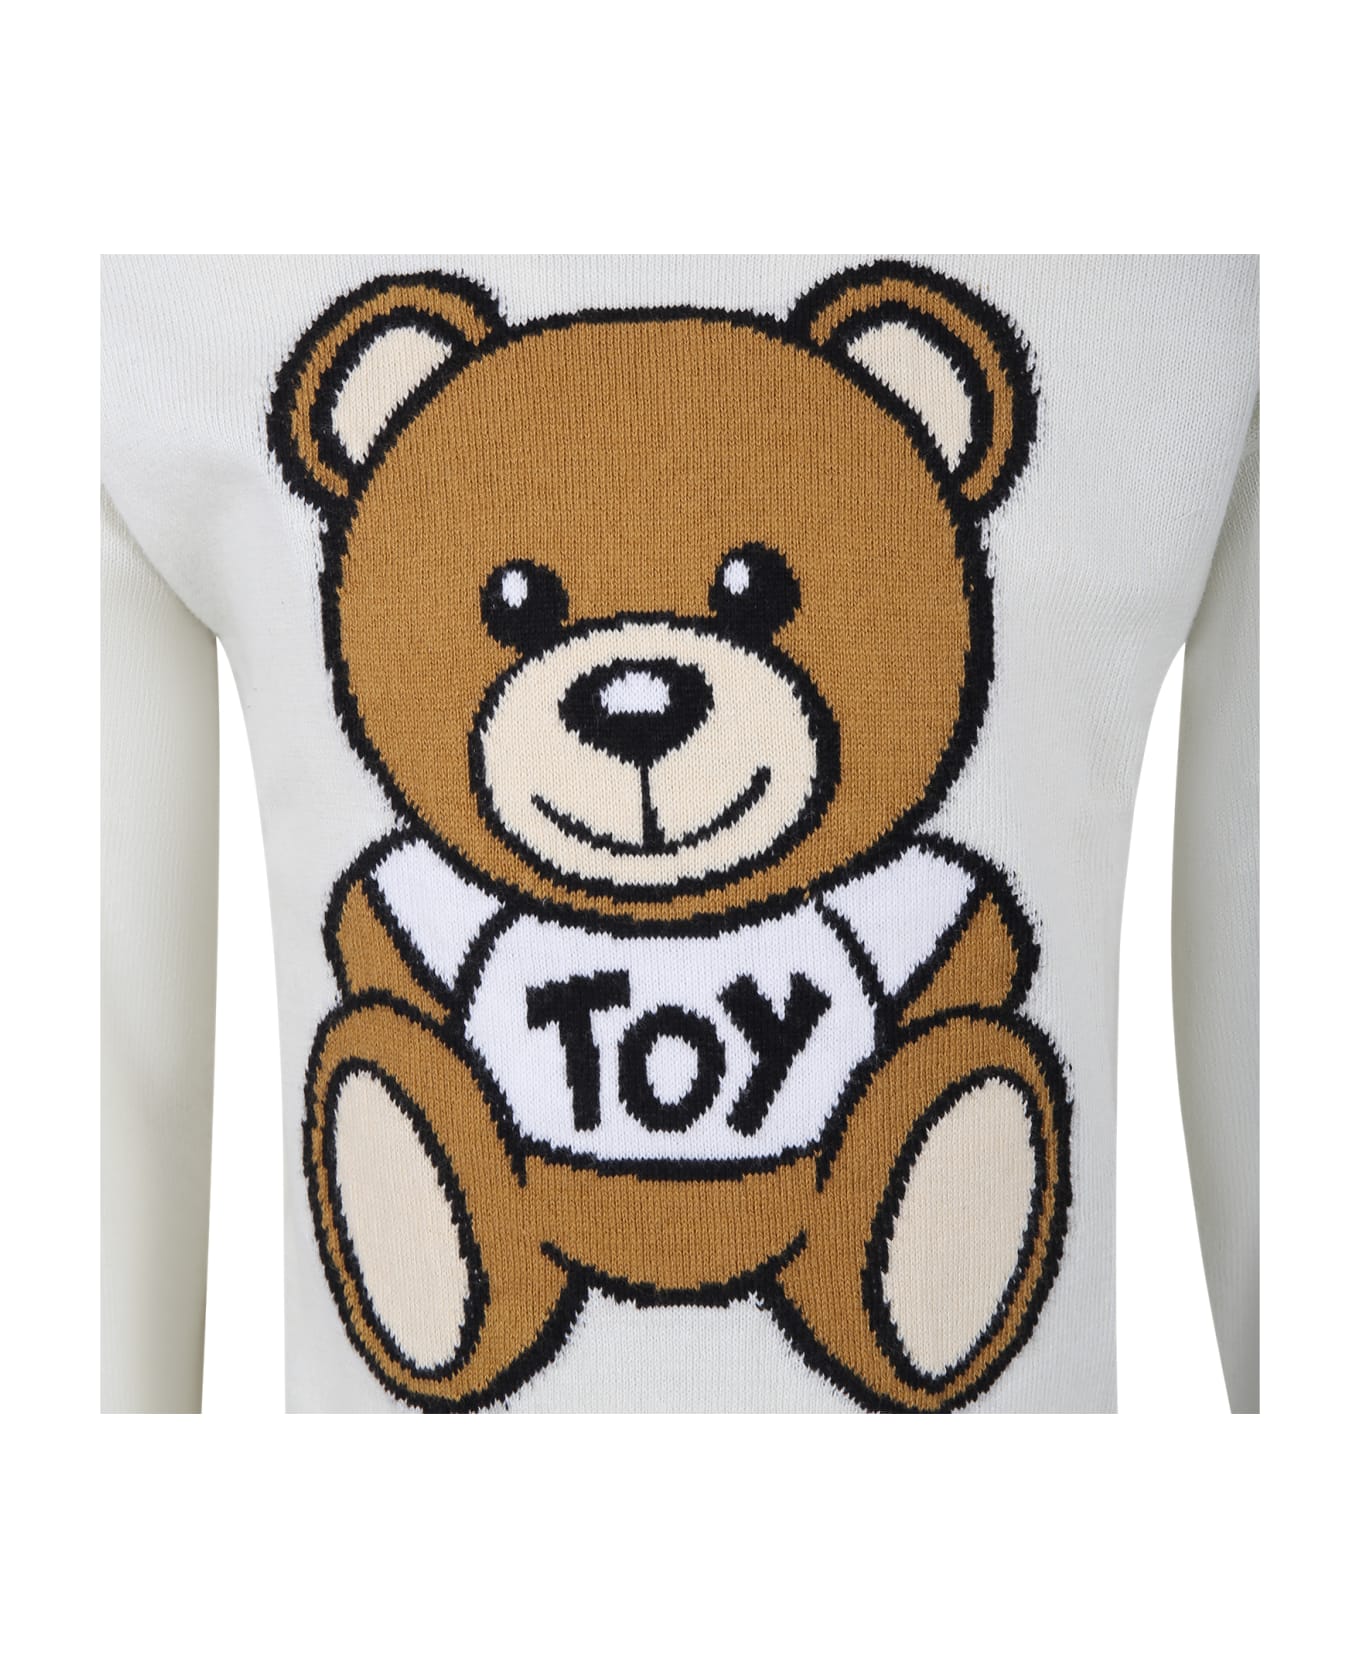 Moschino White Sweater For Kids With Teddy Bear - Cloud ニットウェア＆スウェットシャツ